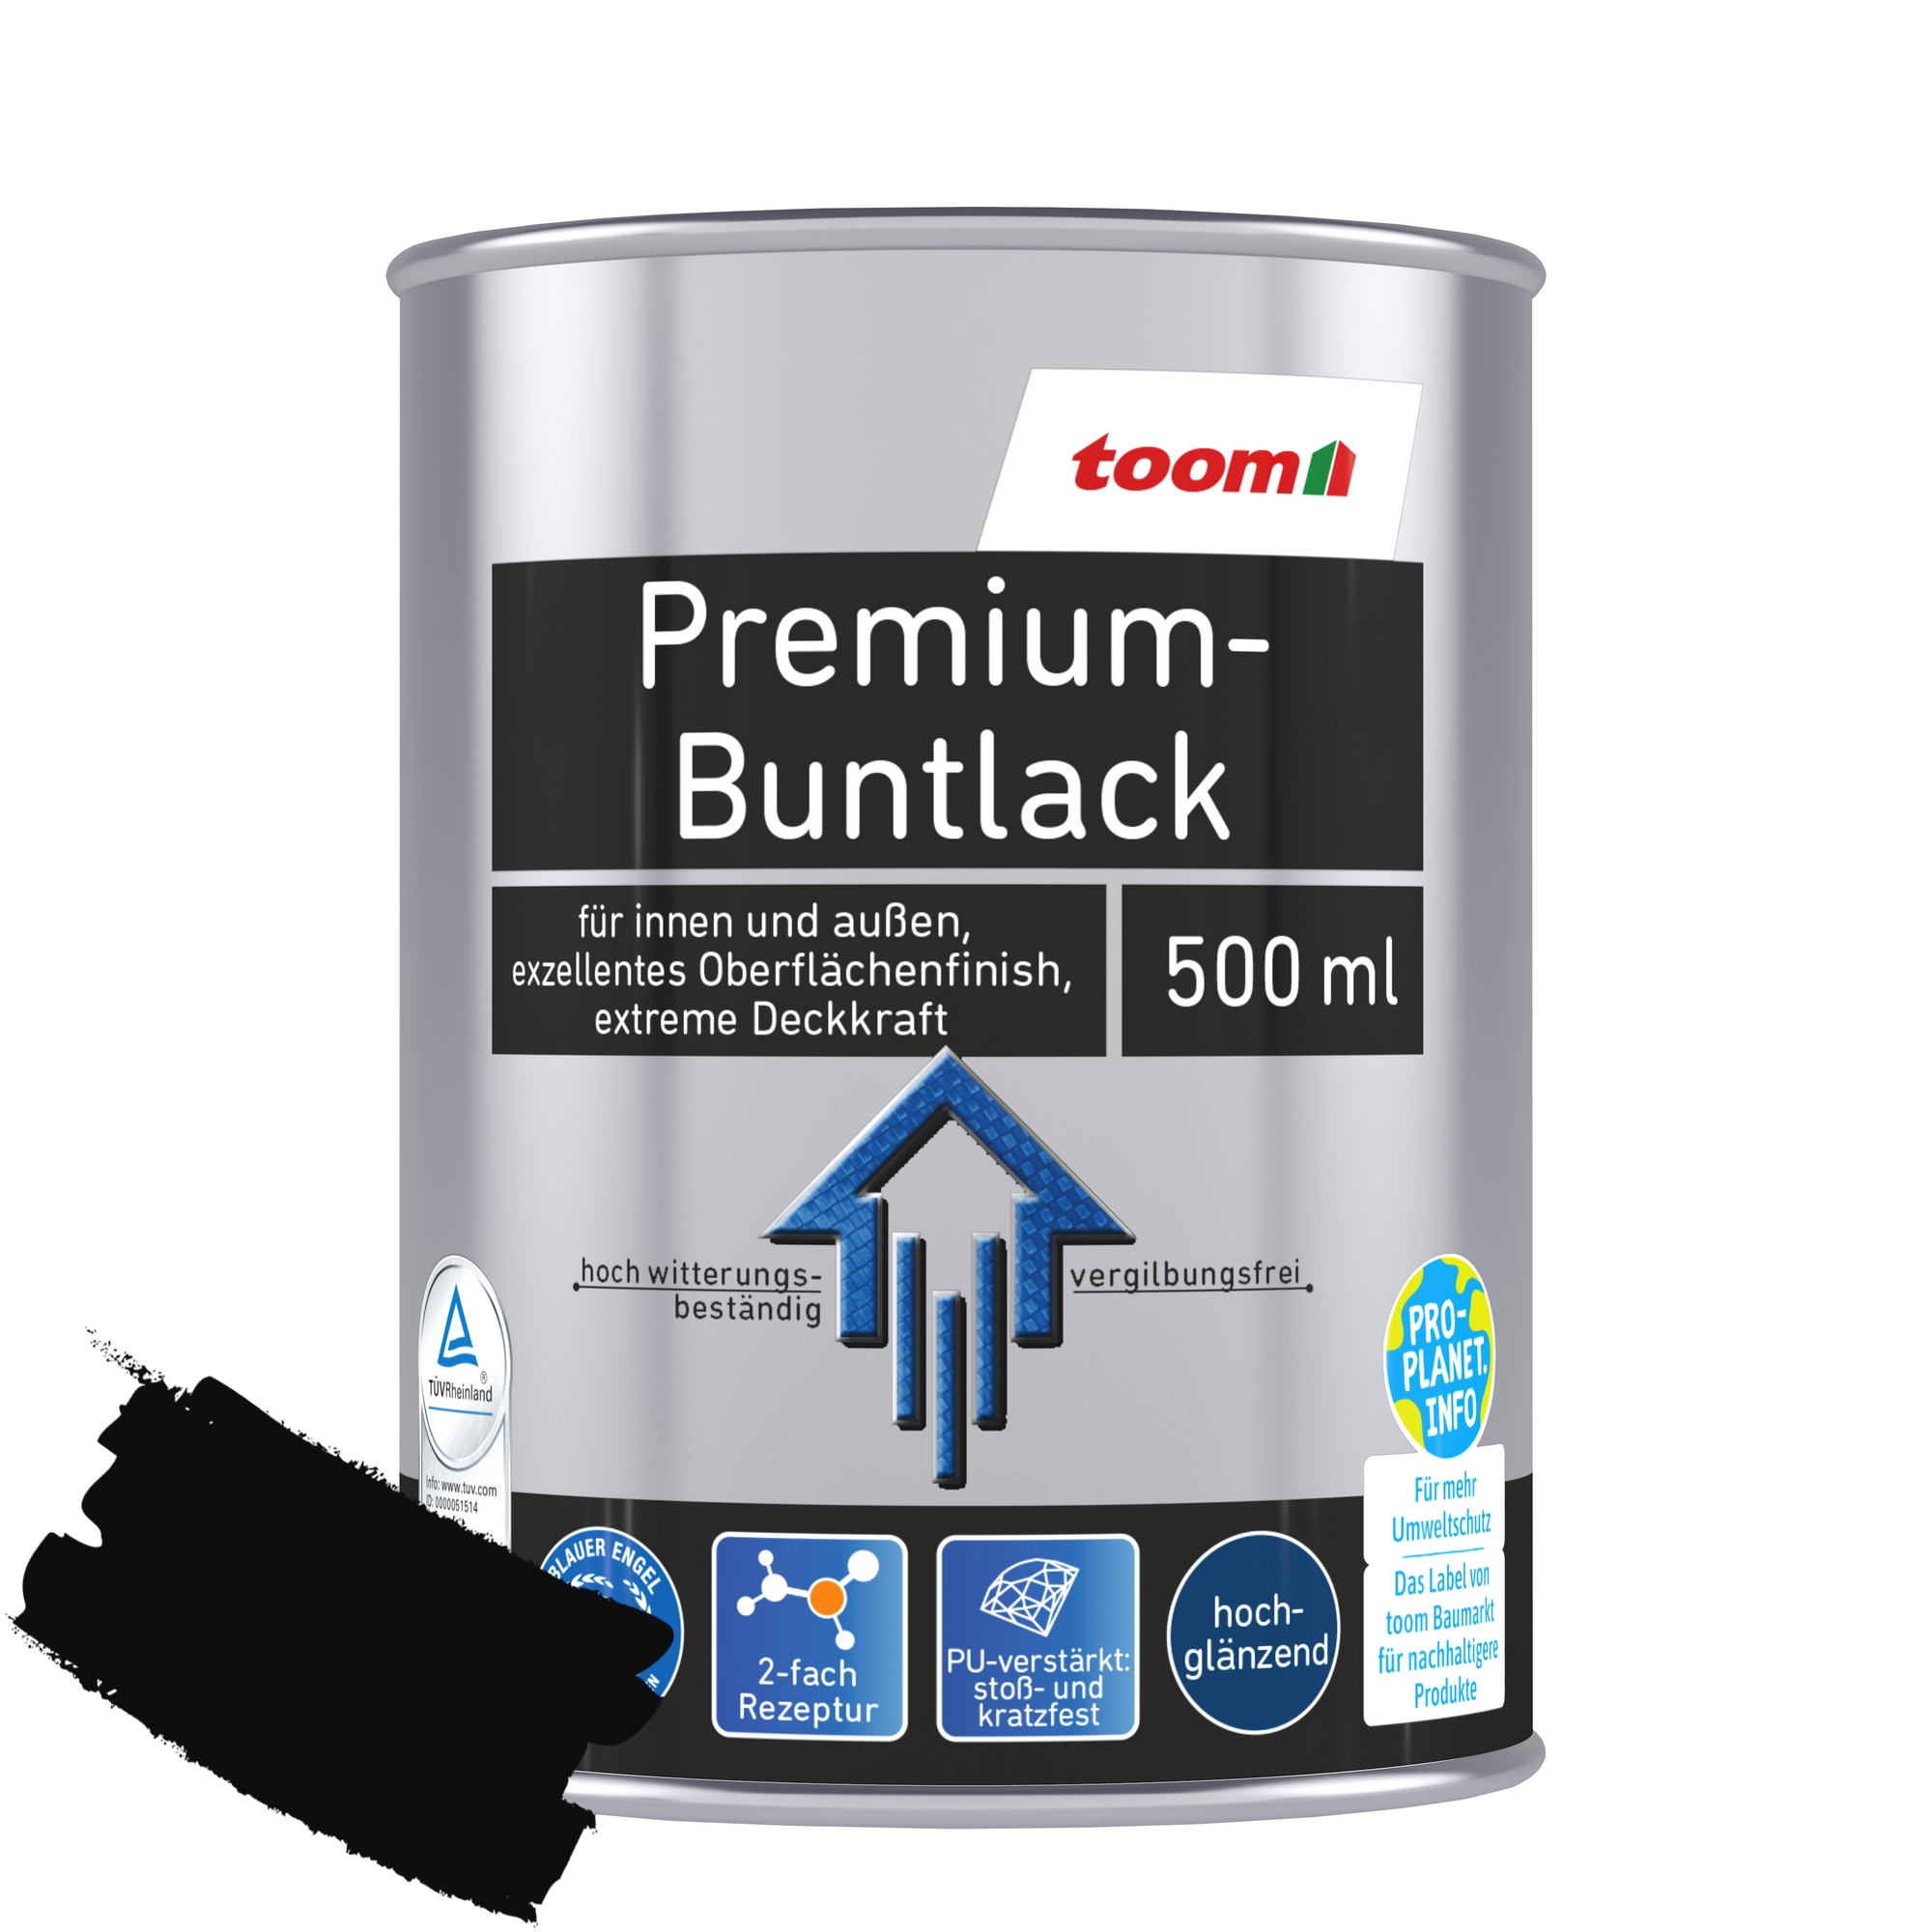 Premium-Buntlack tiefschwarz glänzend 500 ml + product picture